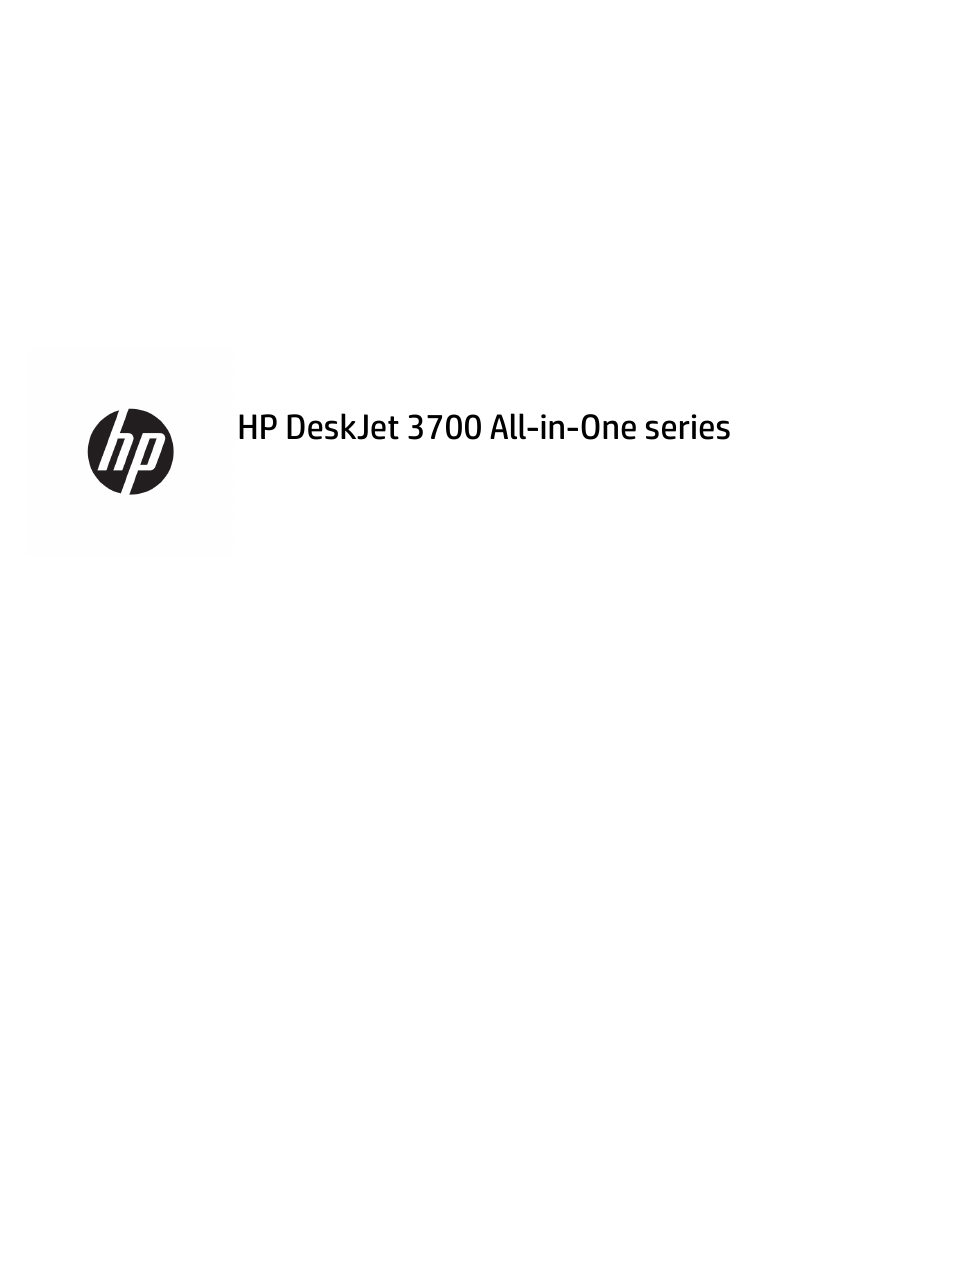 HP DeskJet 3700 Manuale d'uso | Pagine: 122